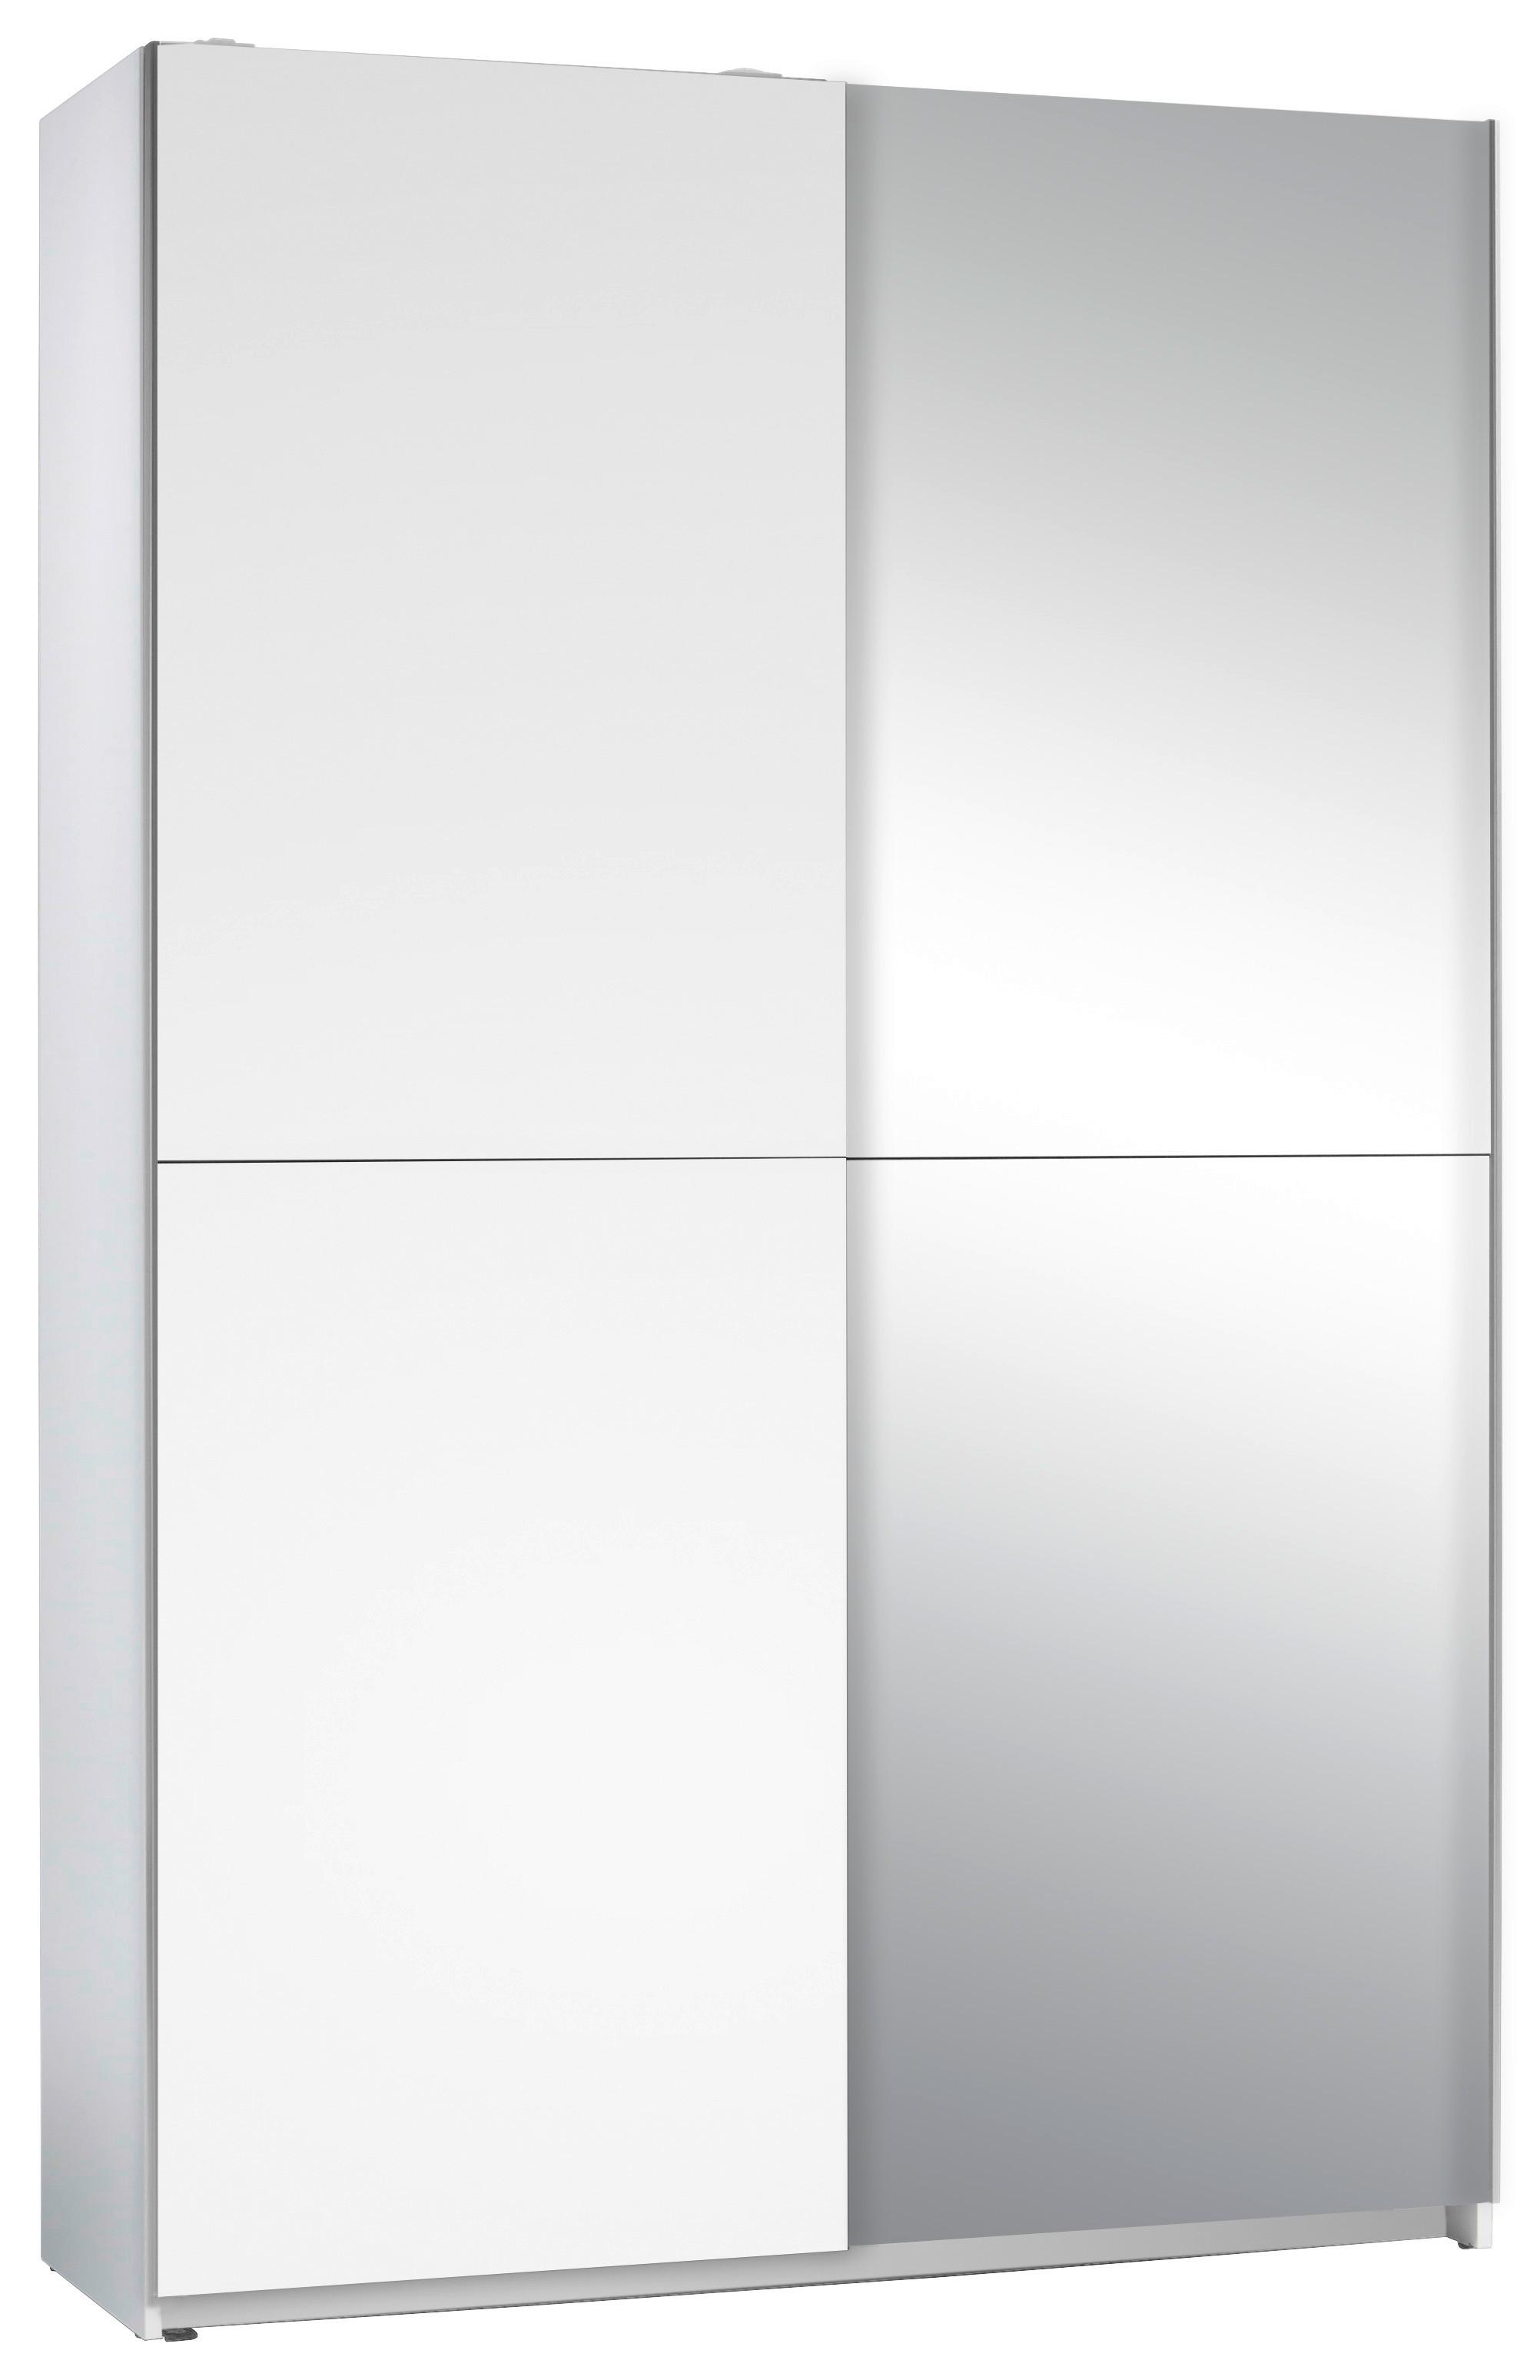 Skříň S Posuvnými Dveřmi Slim 125 Cm Bílá - bílá/barvy stříbra, Basics, sklo (125/195,5/38cm)